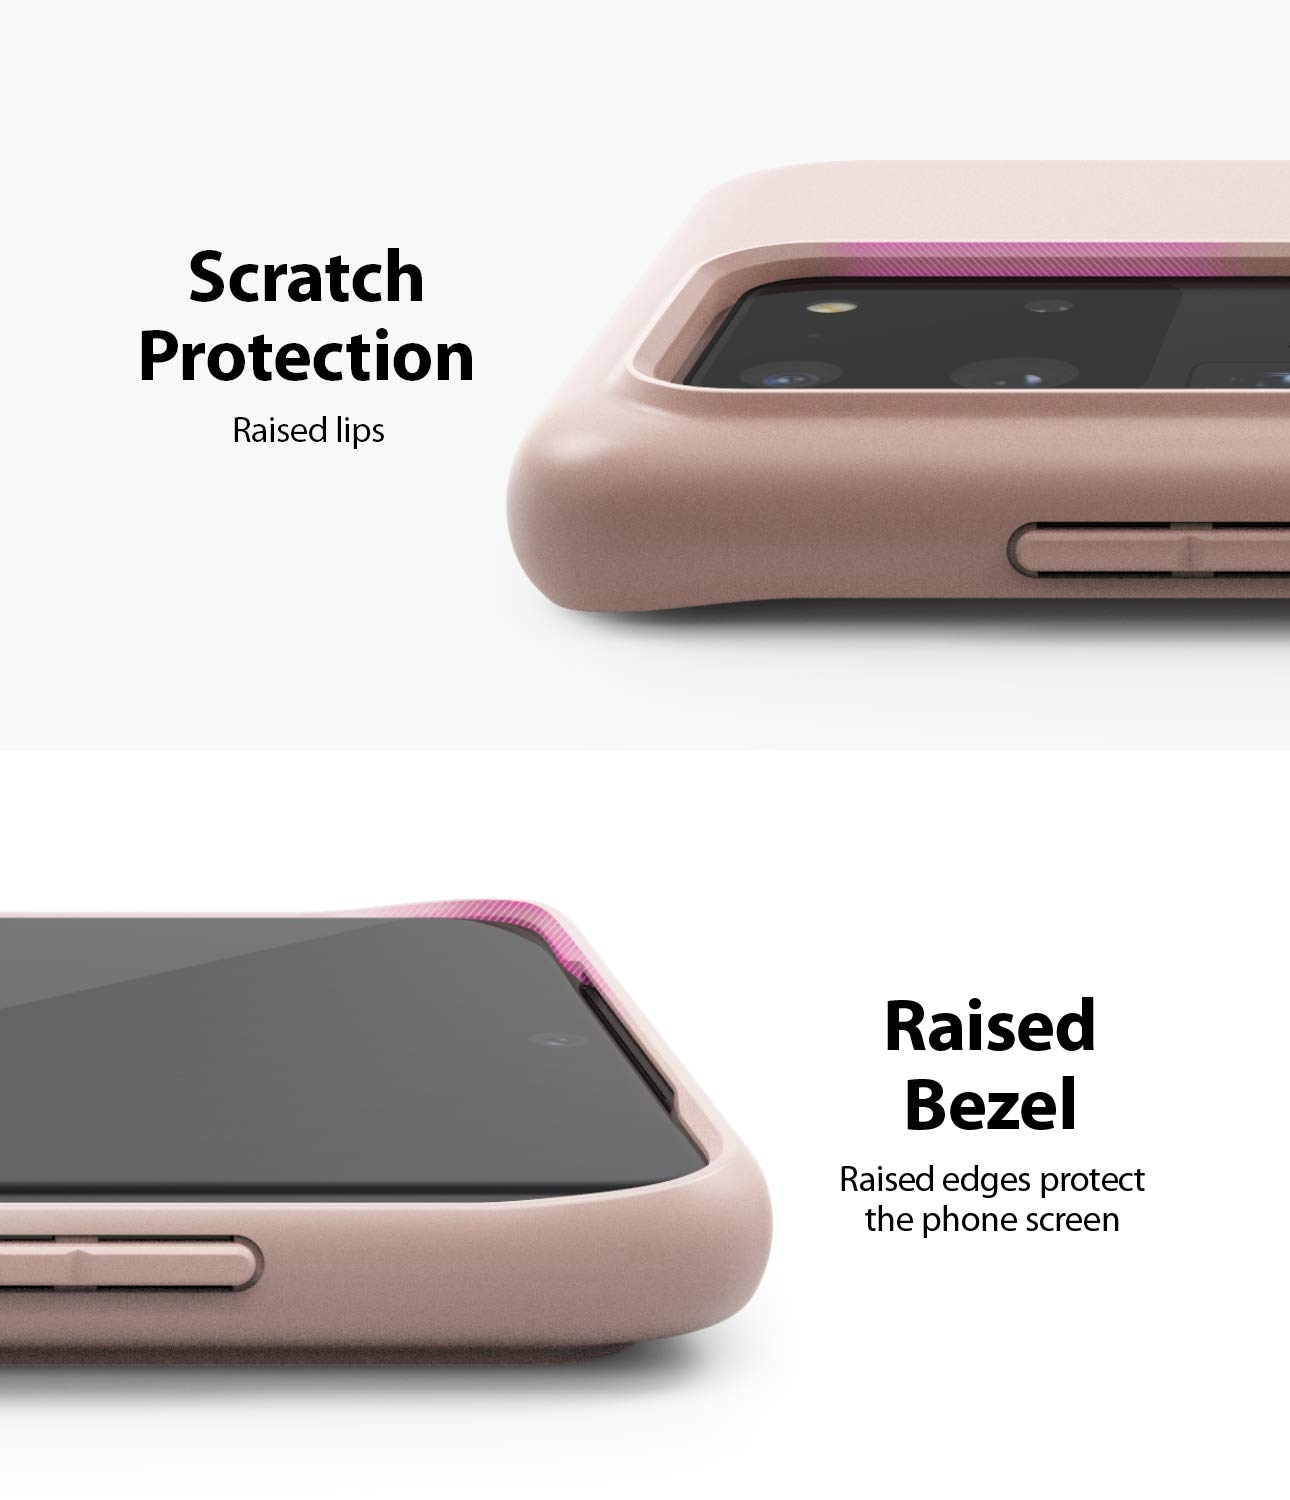 كفر سامسونغ مقاوم للصدمات - زهري   Ringke Slim Compatible with Galaxy S20 Case